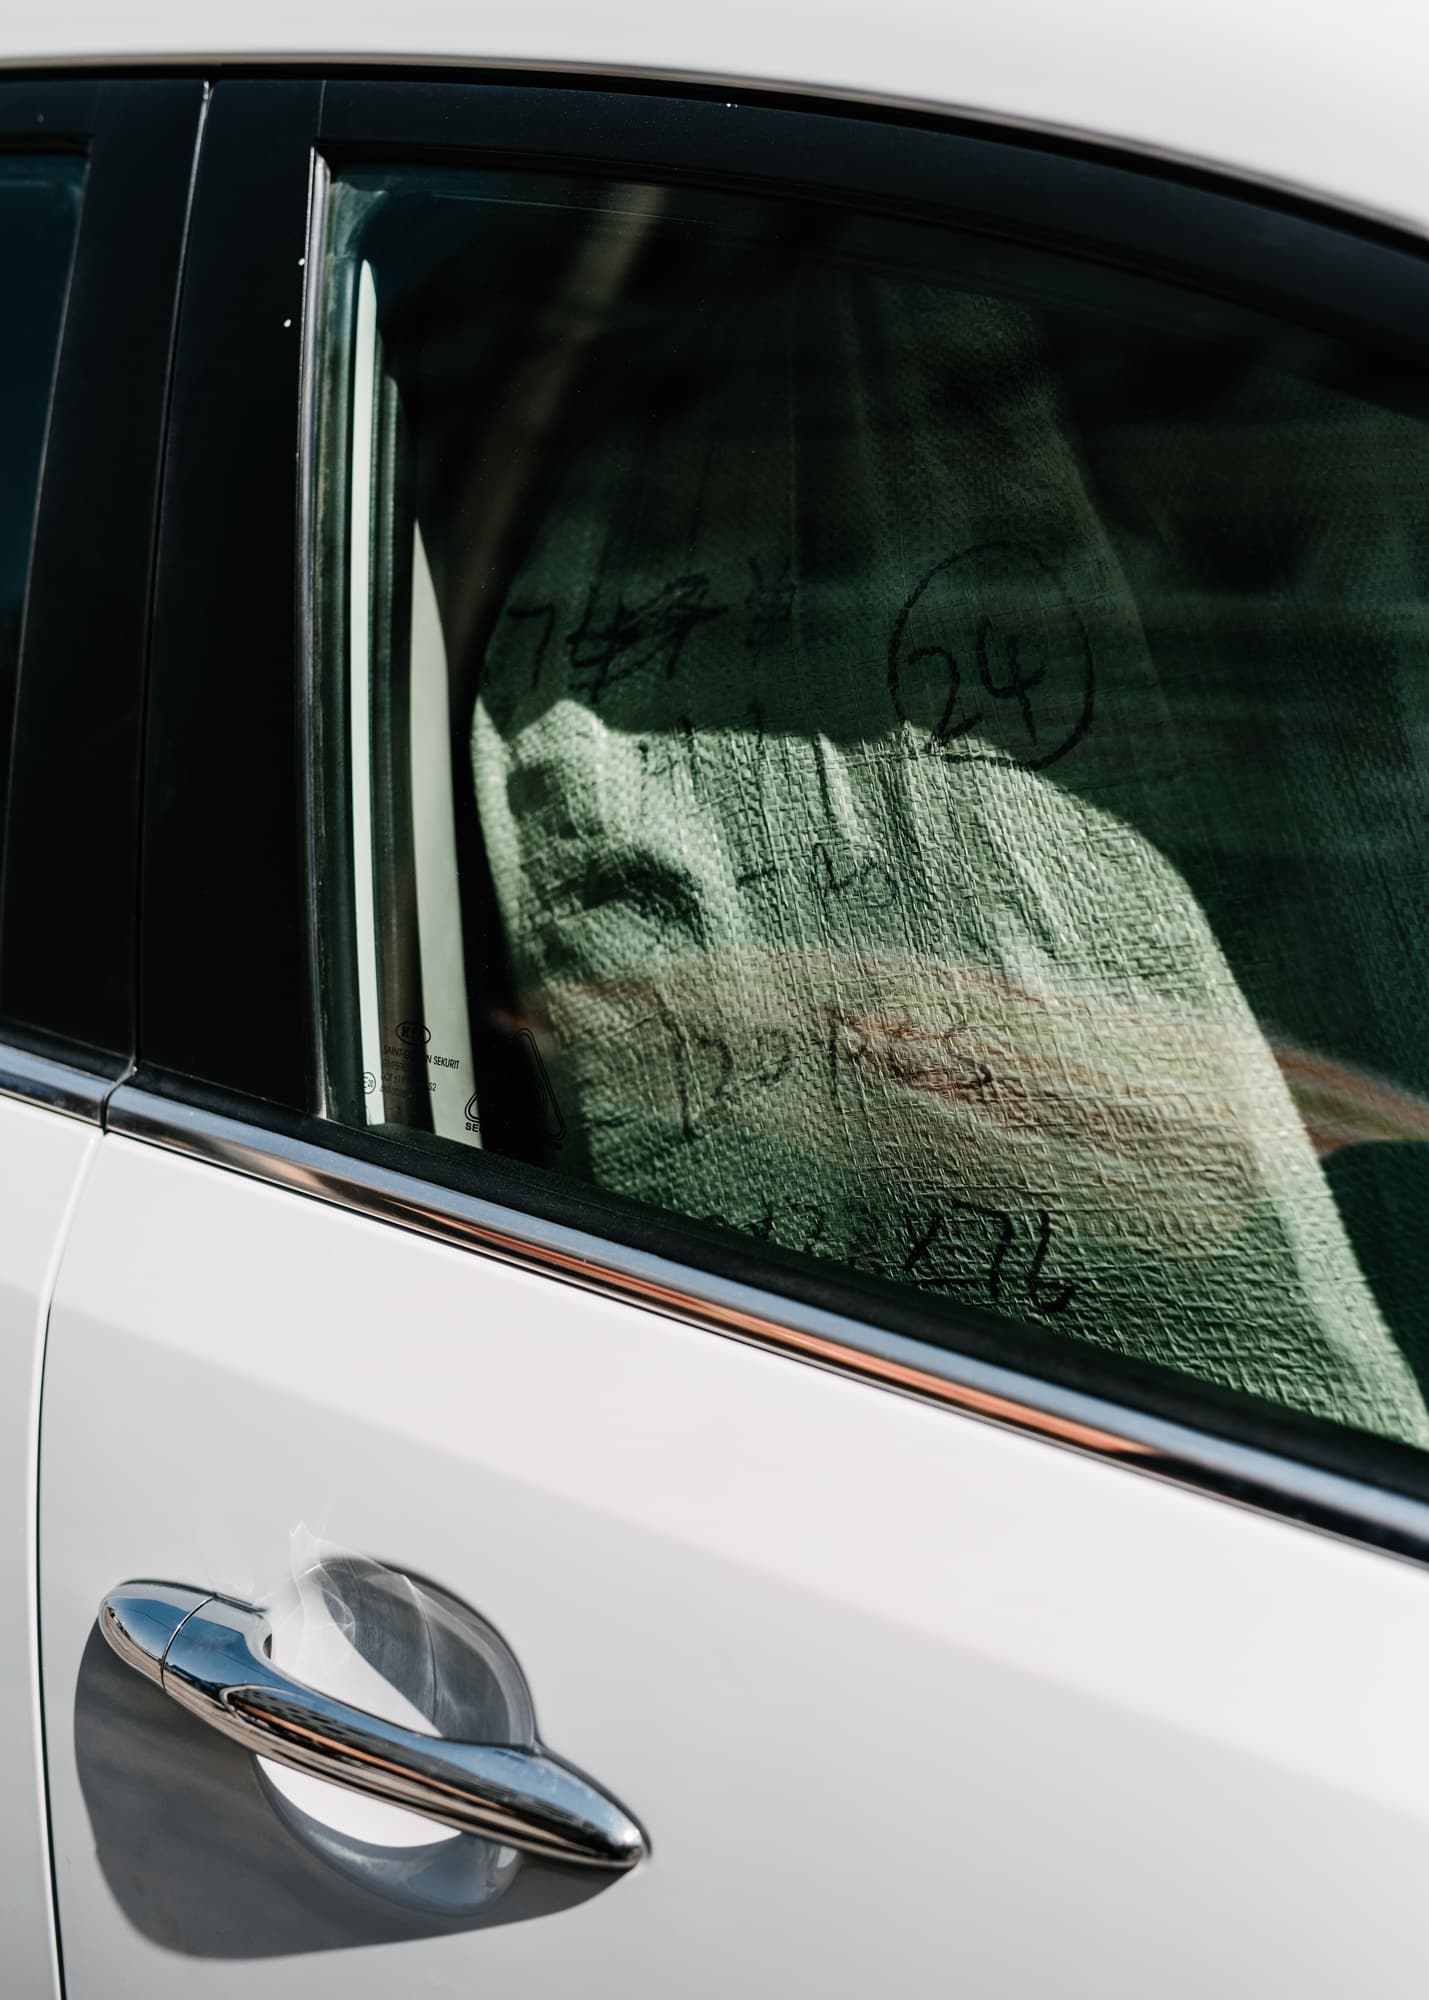 Schooluniforms in bags in the rented car of Abdullah Kurdi in Erbil, Iraq, on the 01.09.2019.